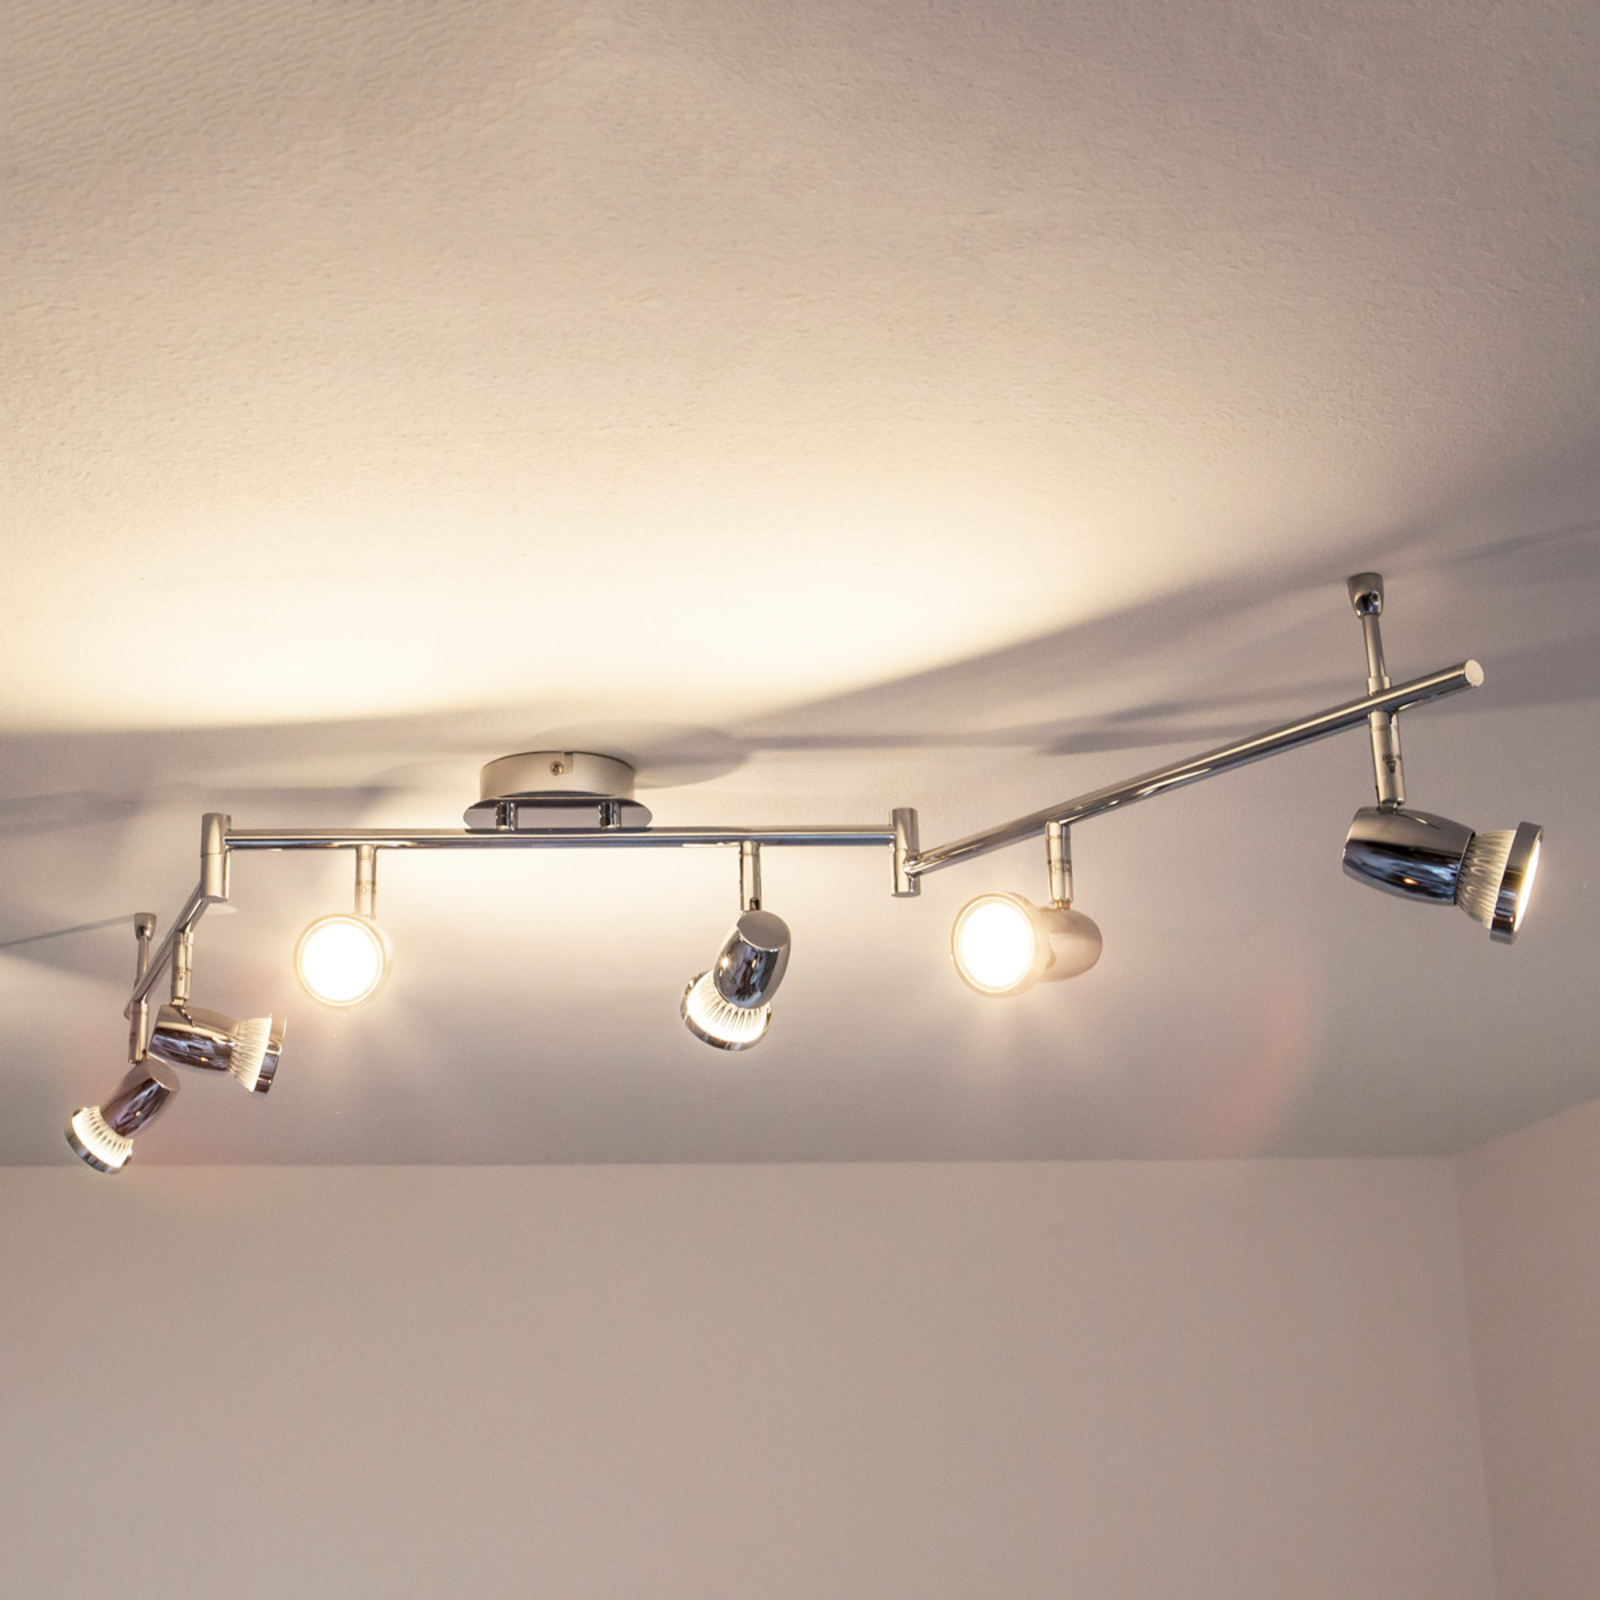 Chromen LED plafondlamp Arminius met zes lampen